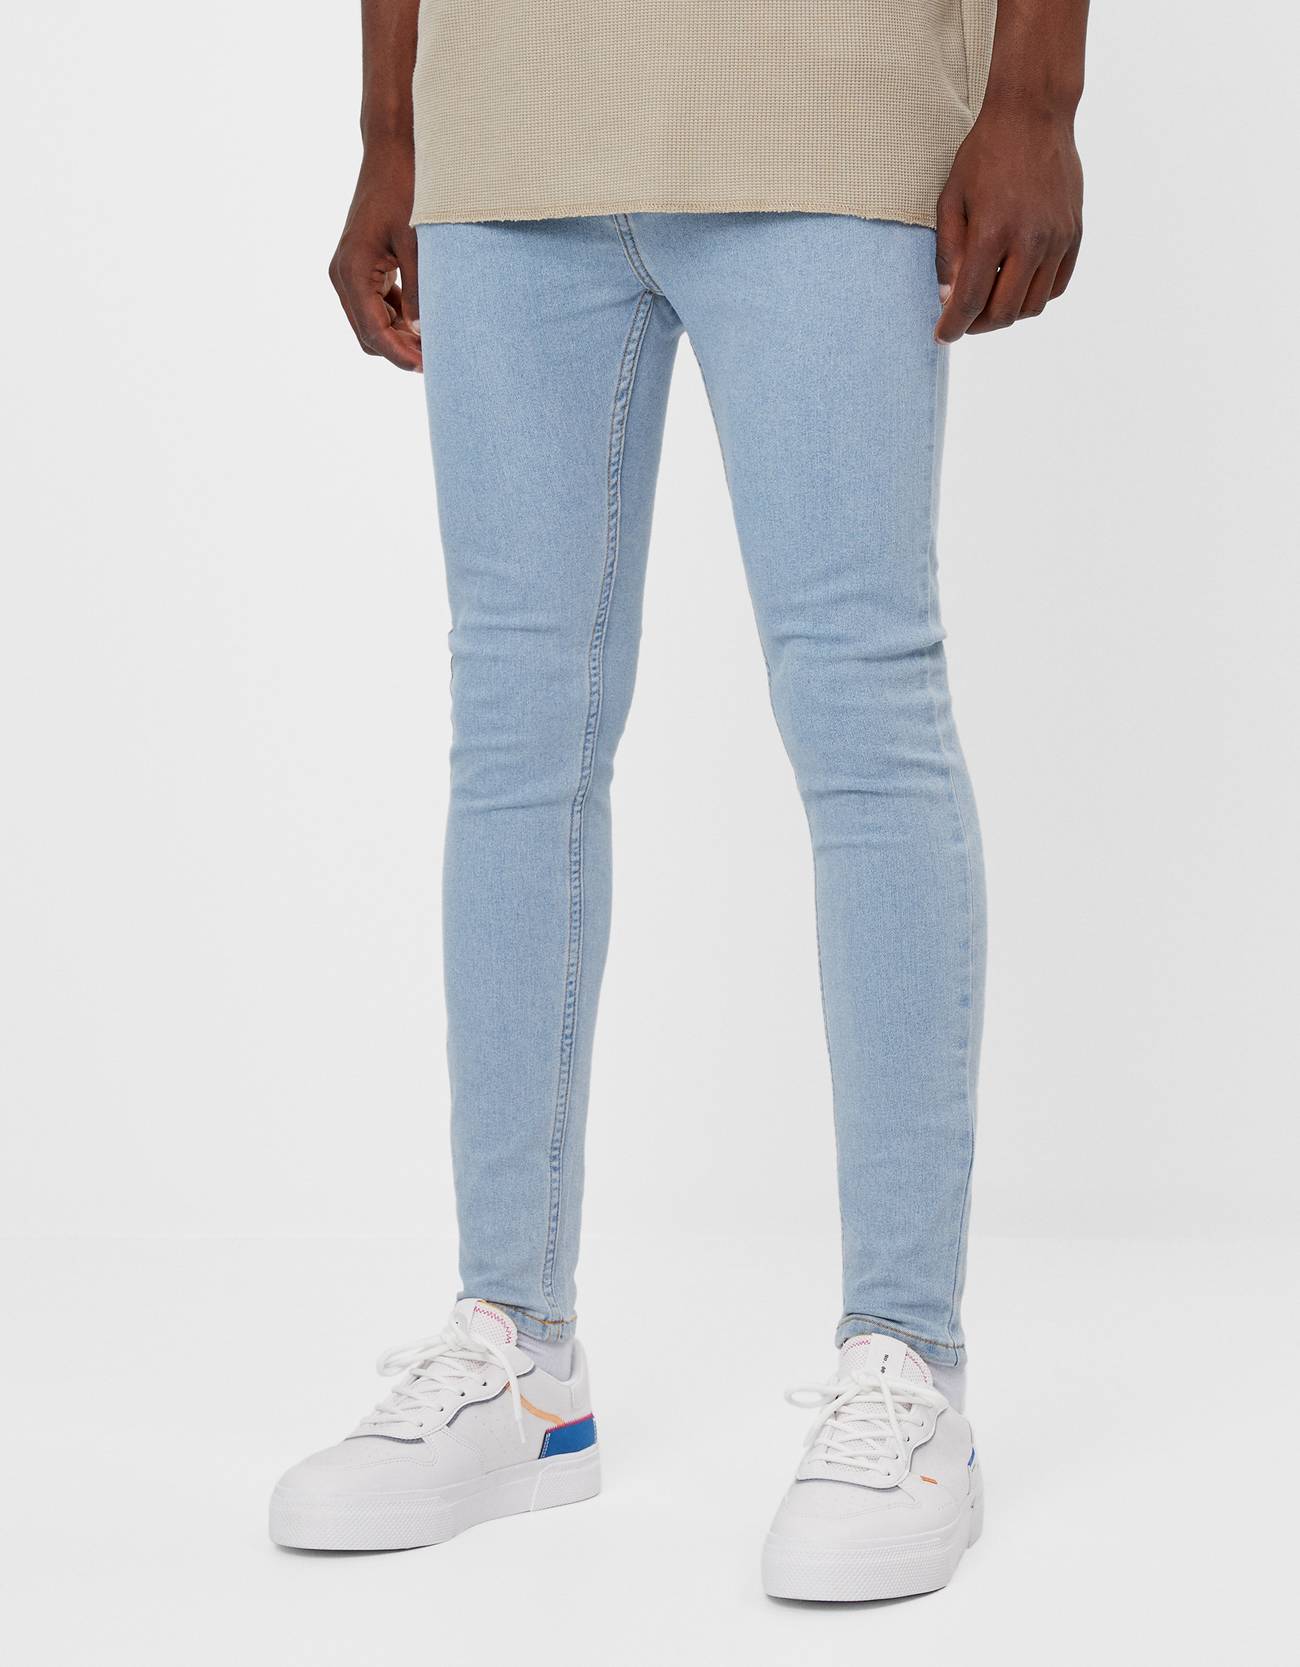 blusa manga longa com calça jeans